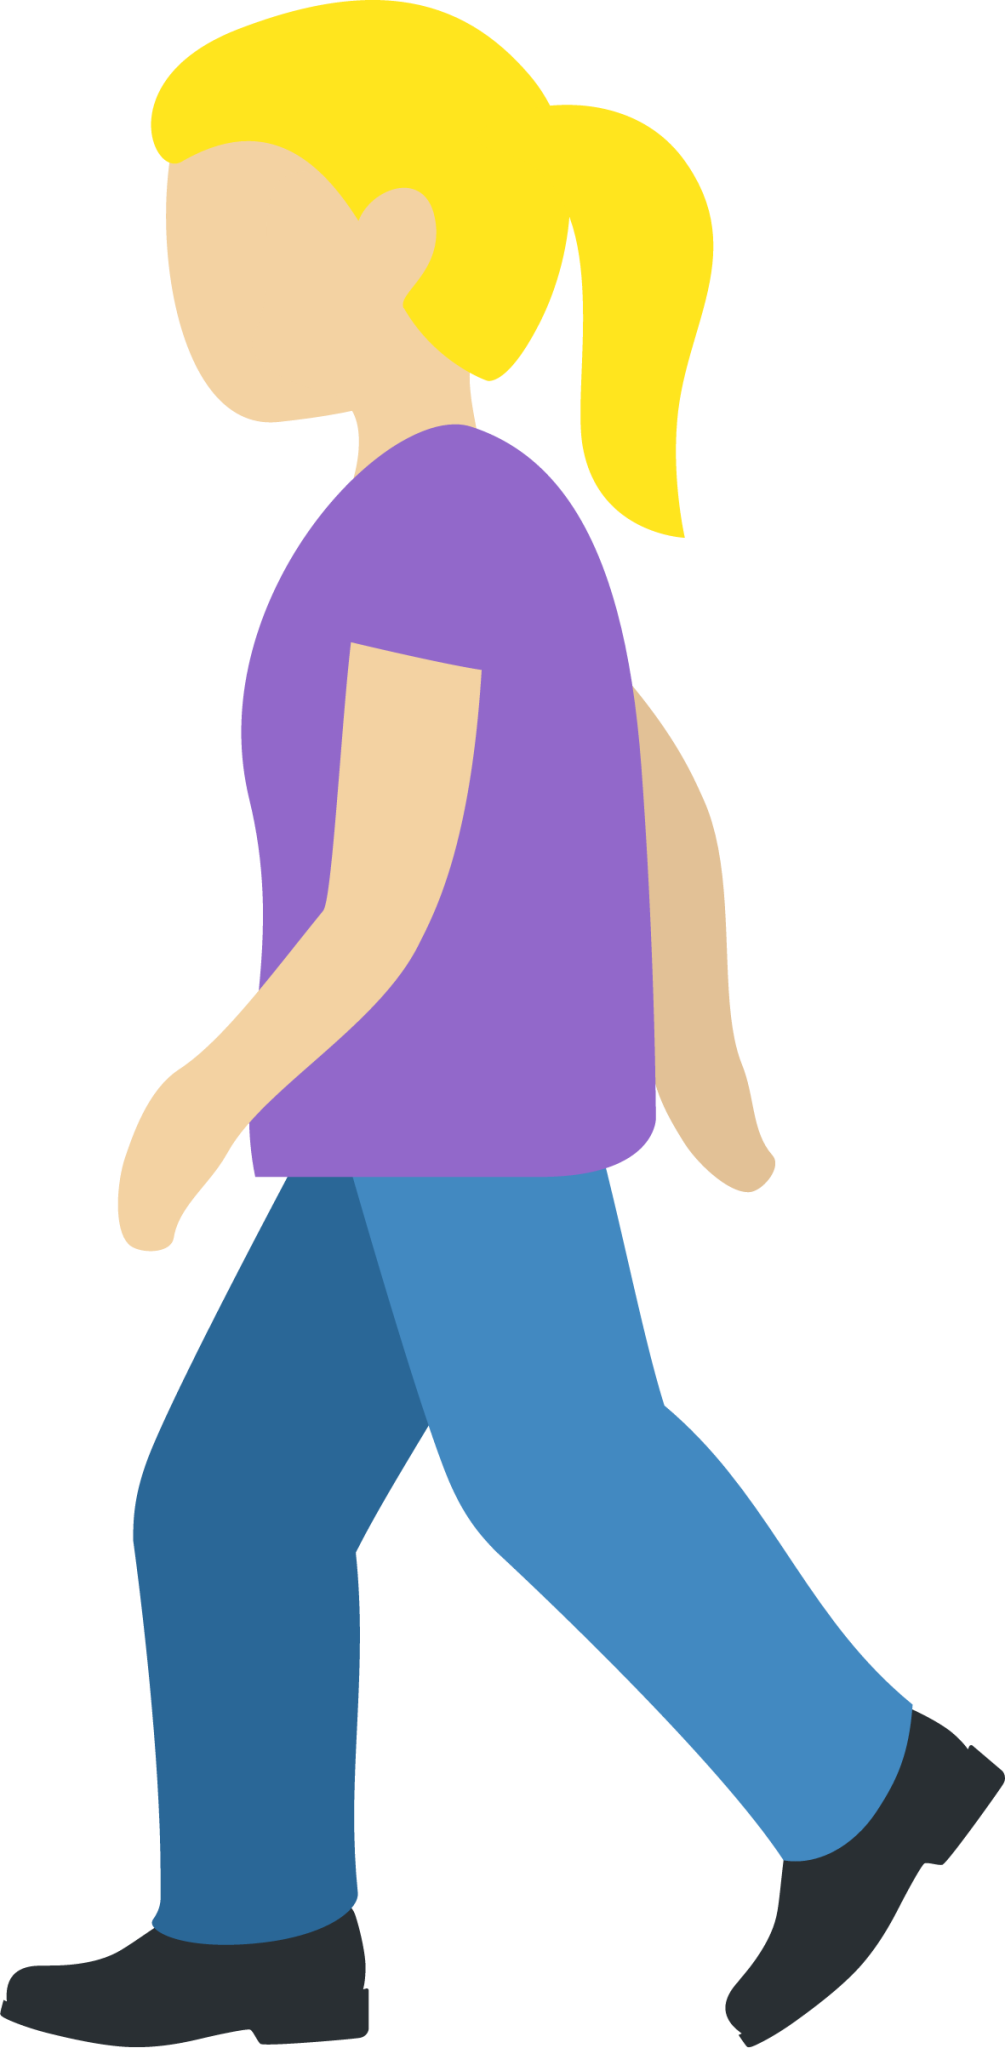 woman walking: medium-light skin tone emoji